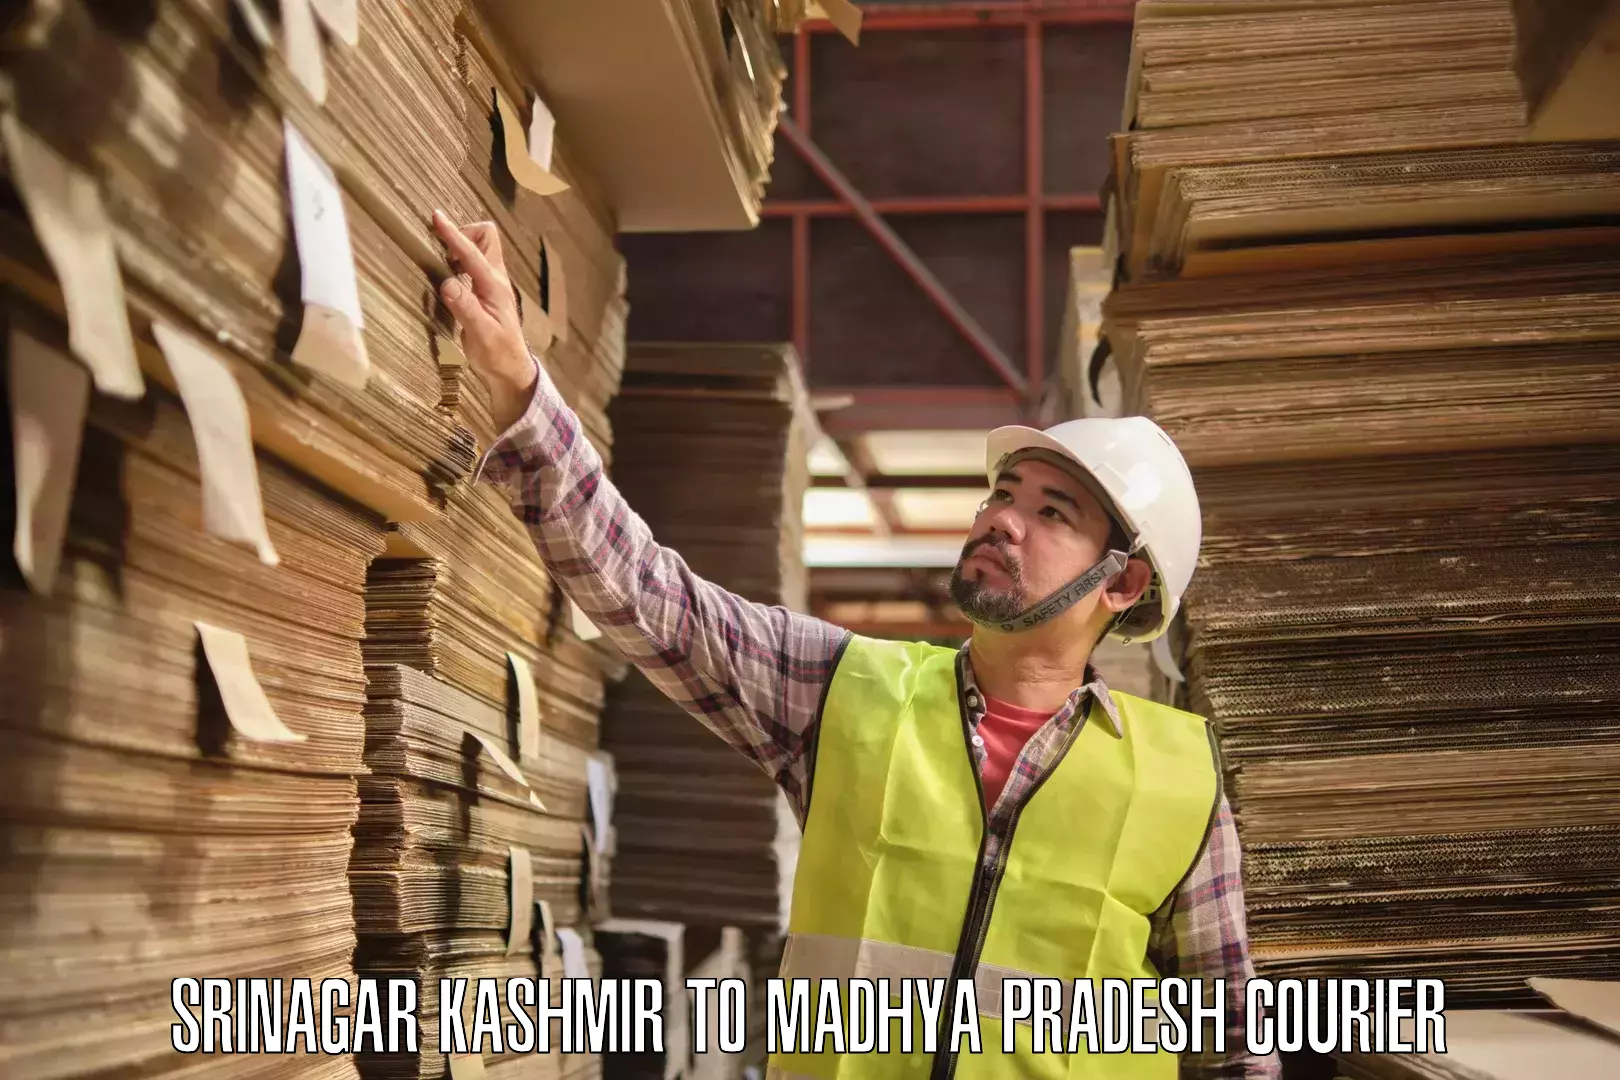 Professional courier services in Srinagar Kashmir to Agar